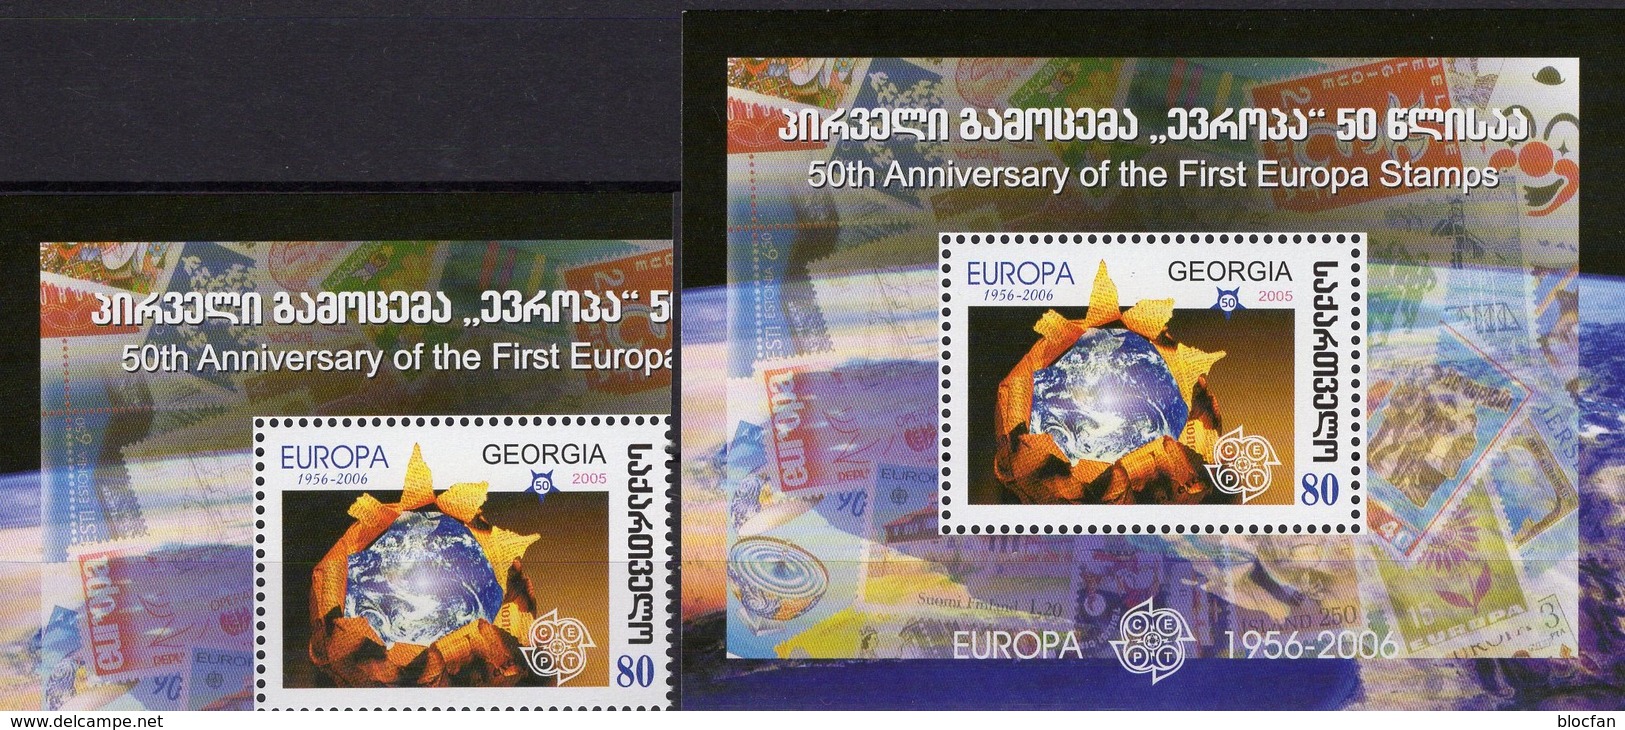 EUROPA 1956-2006 GEORGIE 514+Block 38 ** 5€ M/s CEPT Stamps On Stamp Hojita S/s Blocs Philatelic Sheet Bf Georgia - Géorgie